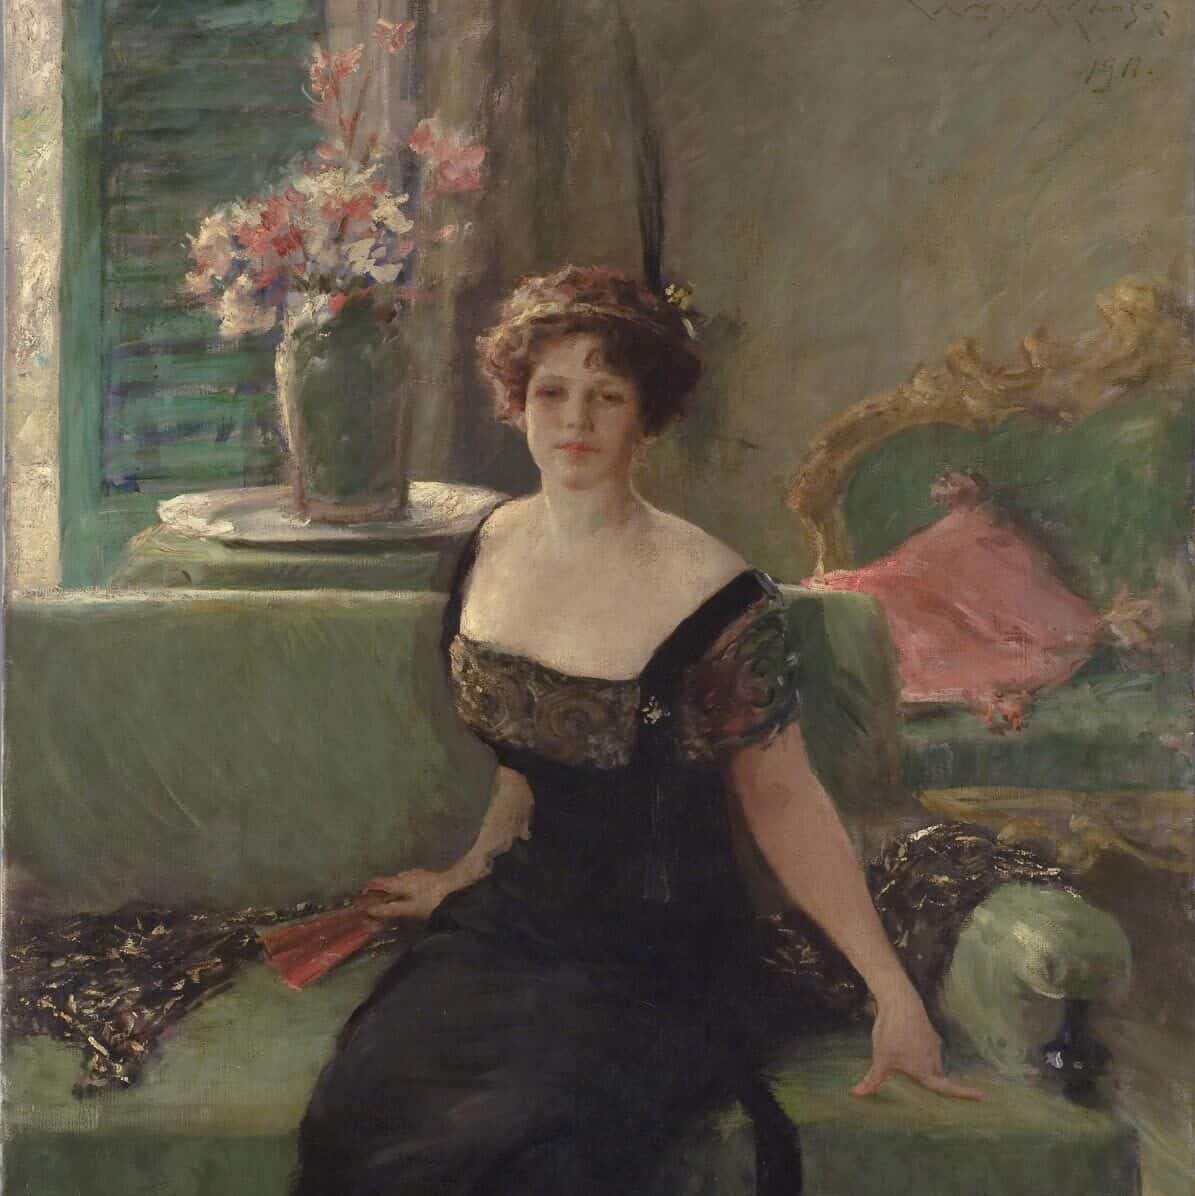 William Merritt Chase, Portrait de dame en noir